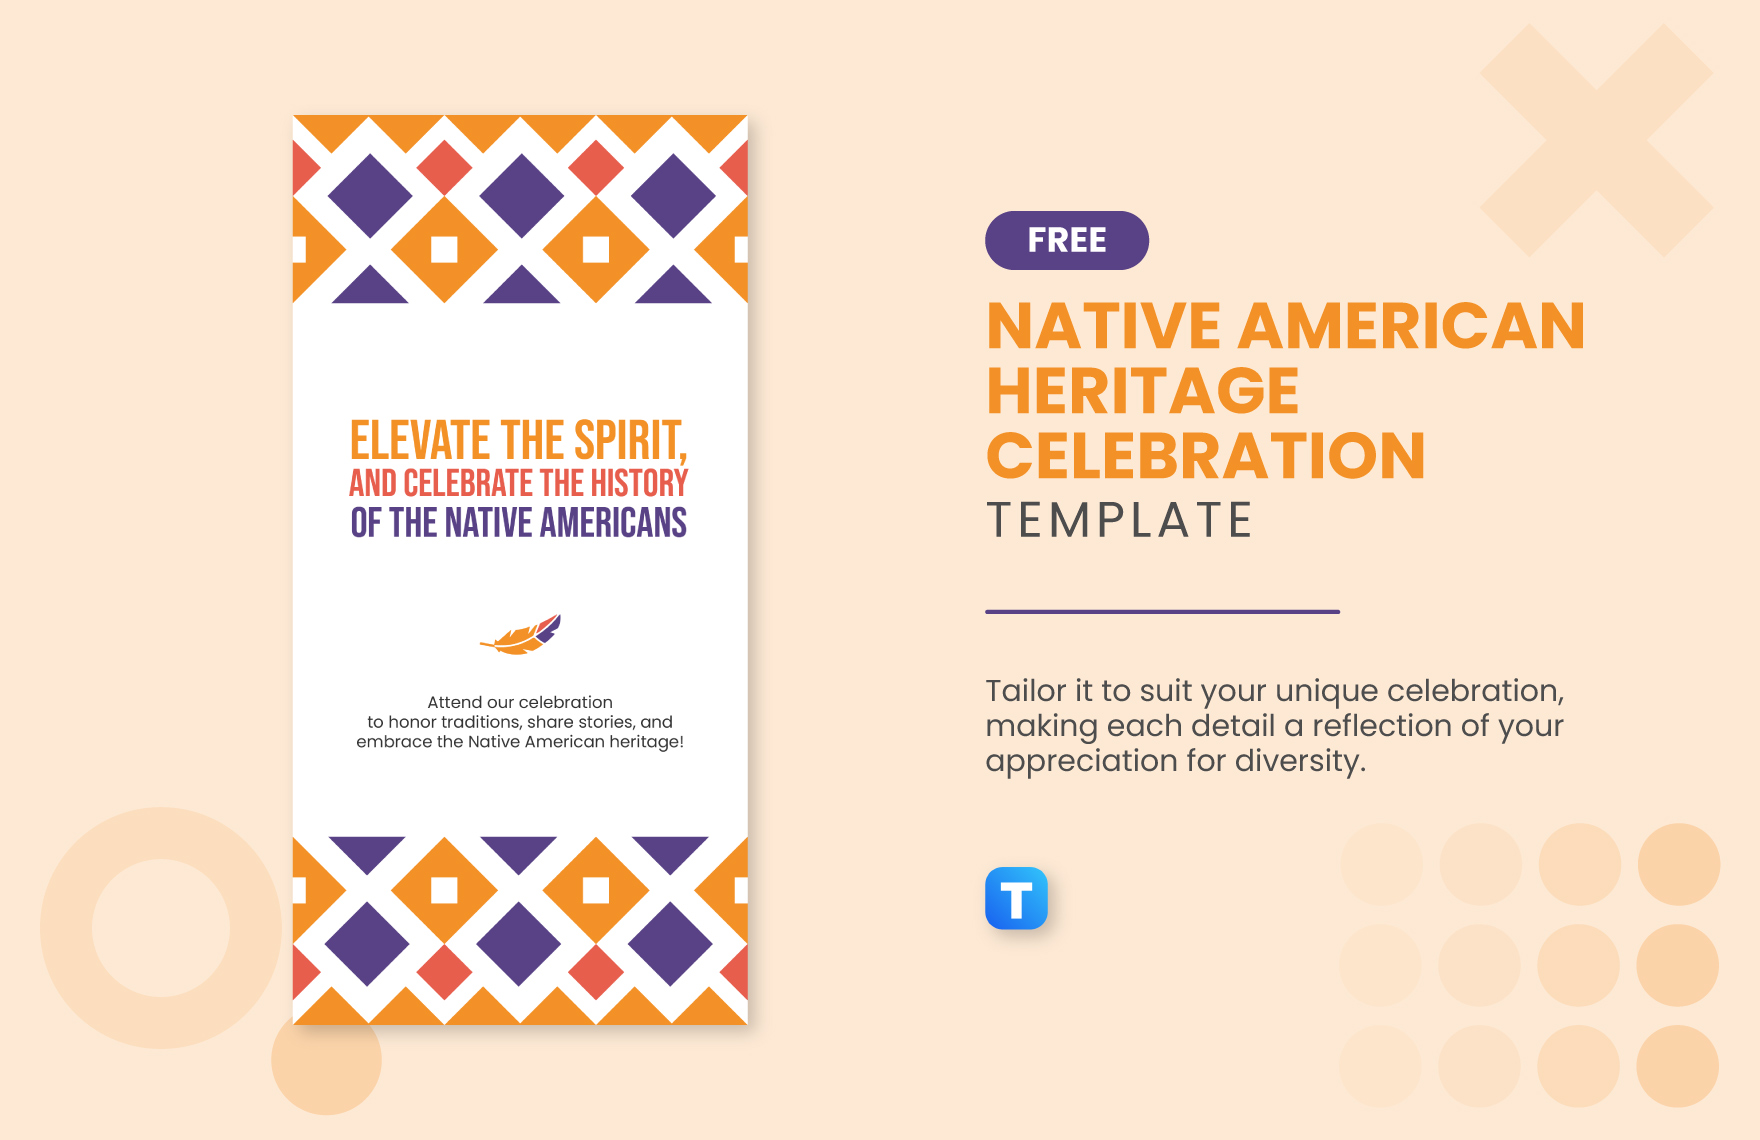 Native American Heritage Celebration Template